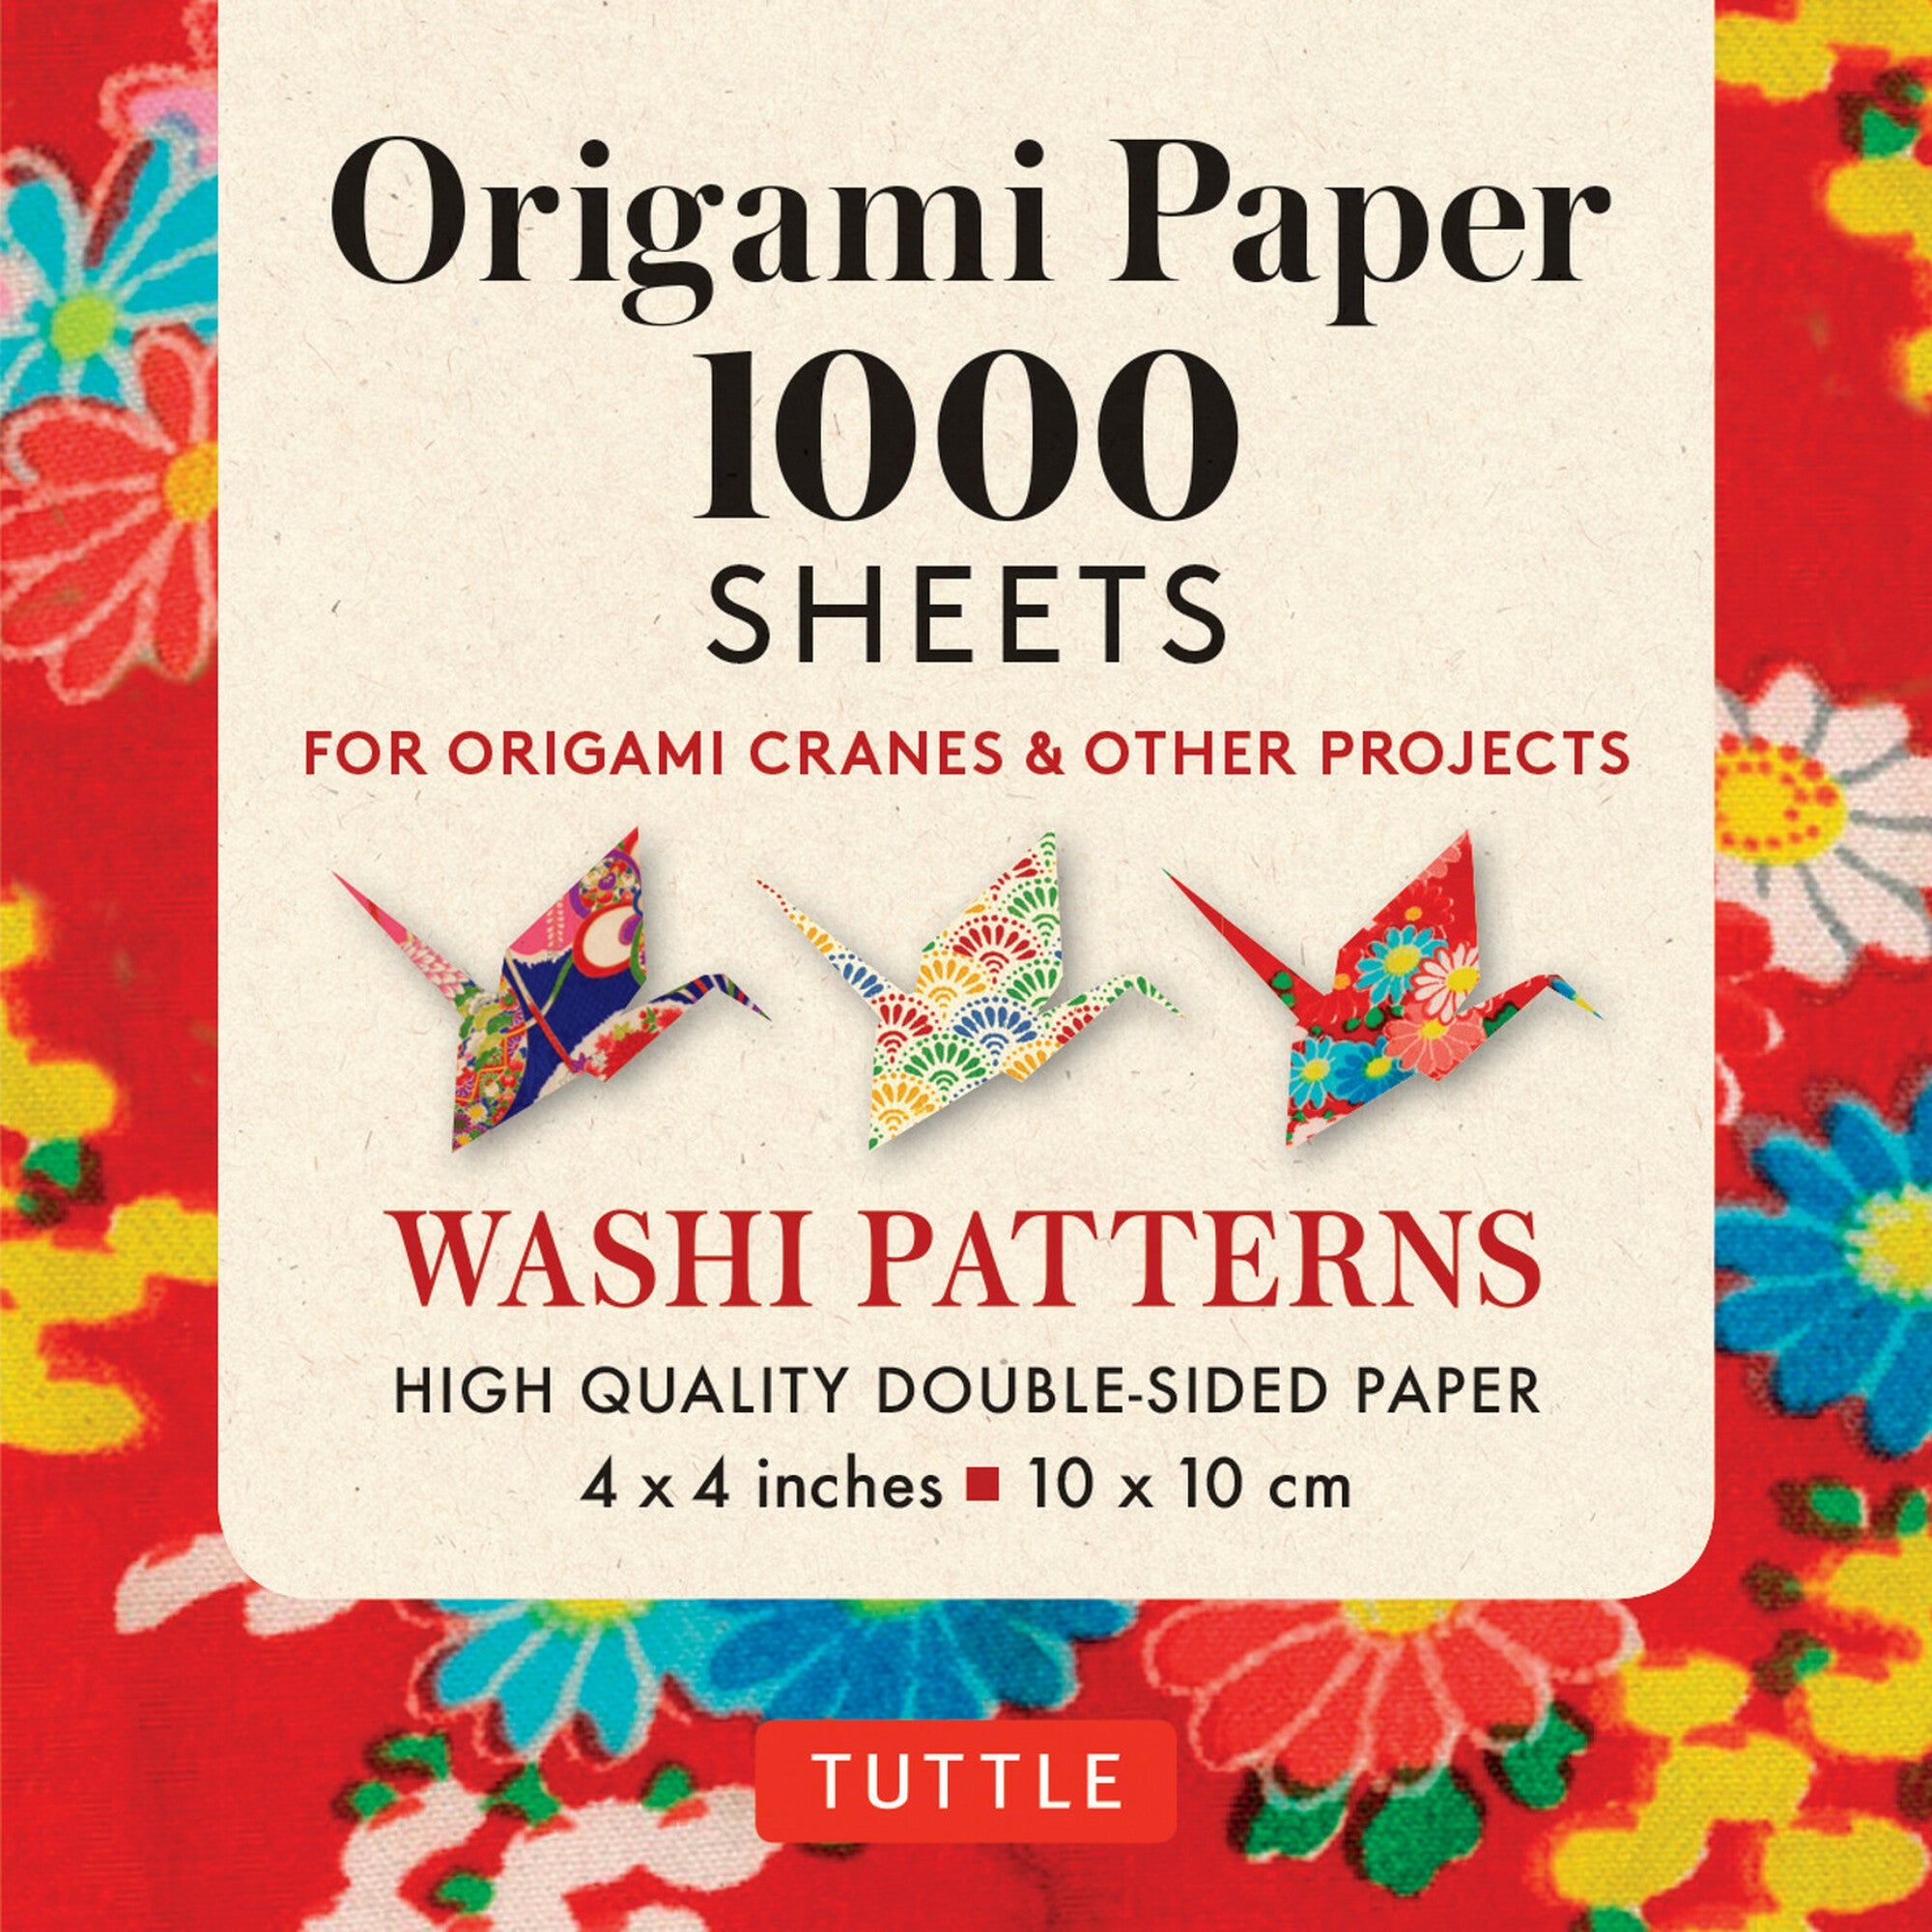 1000 sheets 4” Origami Paper Washi Patterns